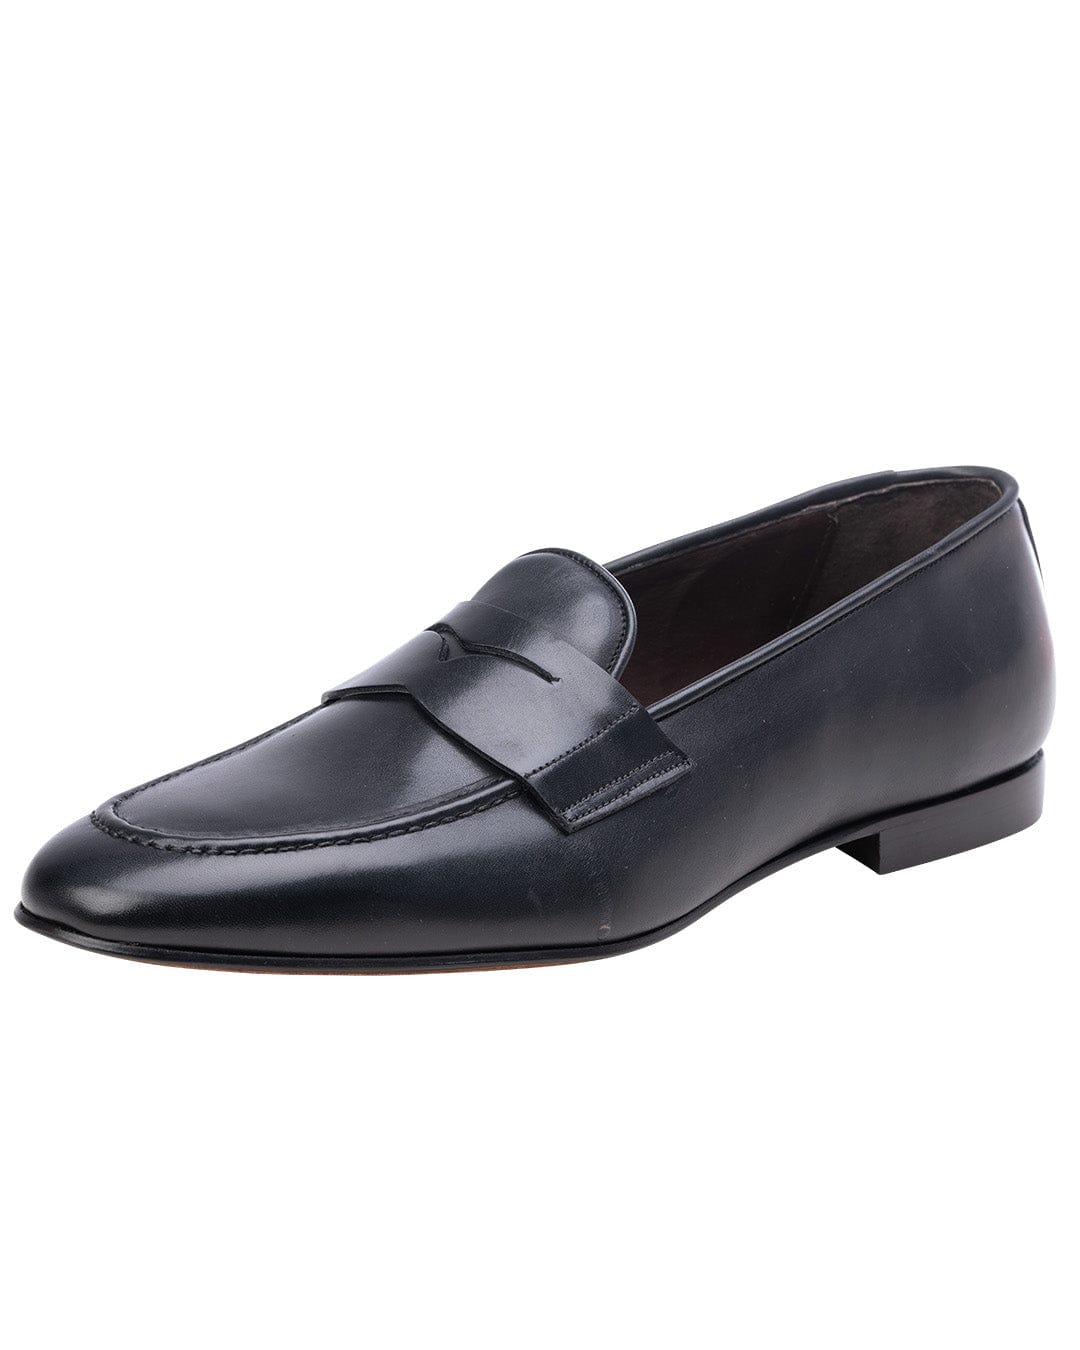 Gagliardi Shoes Gagliardi Black Made in Italy Penny Loafers